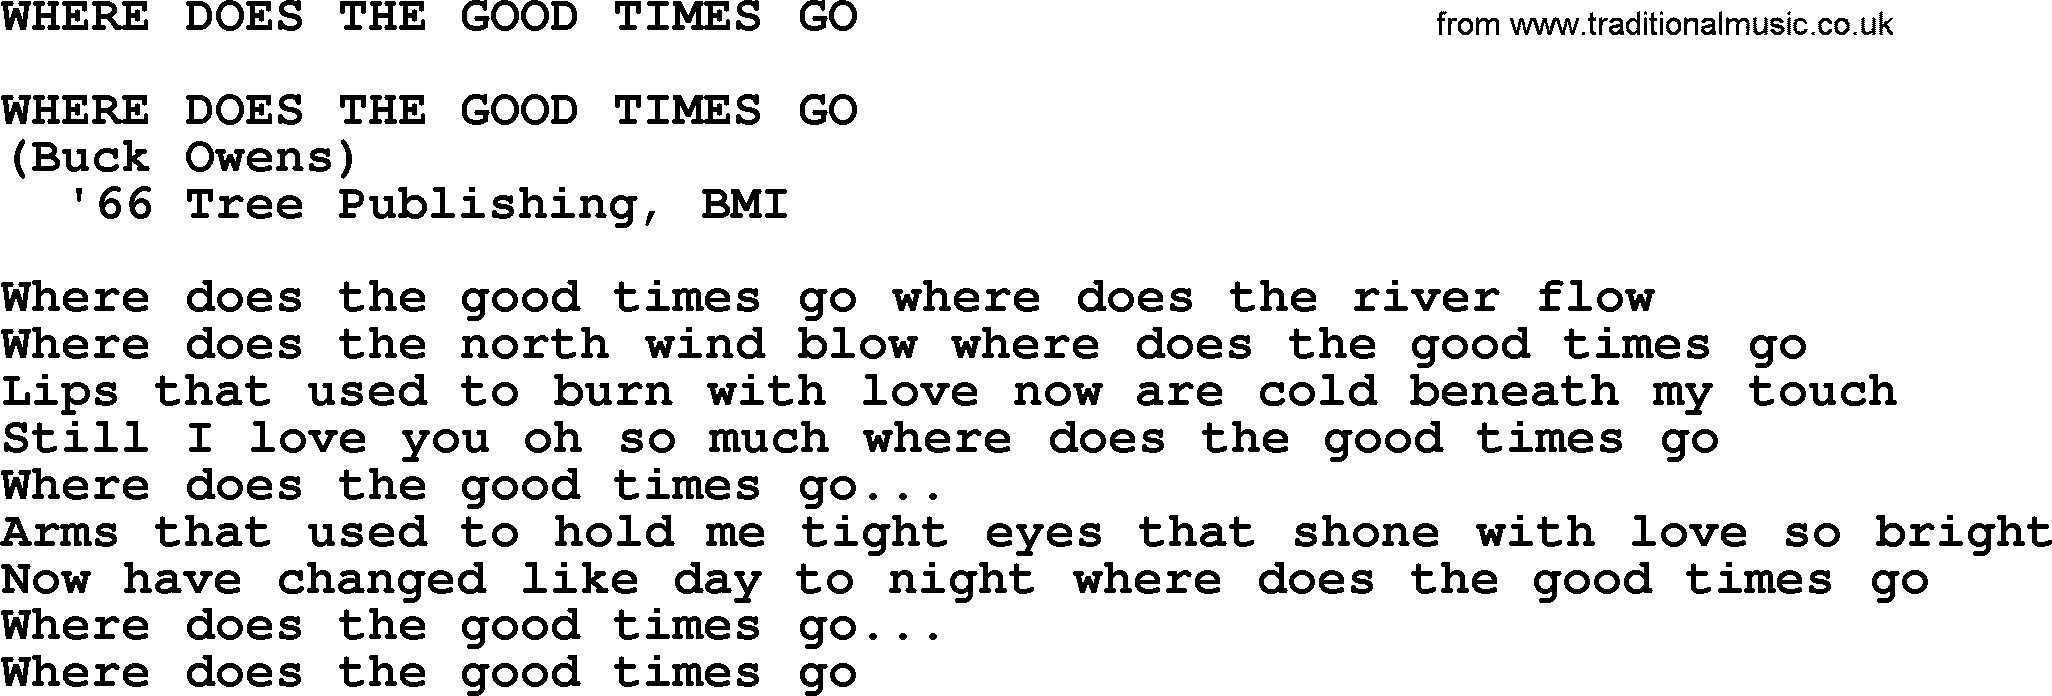 Merle Haggard song: Where Does The Good Times Go, lyrics.